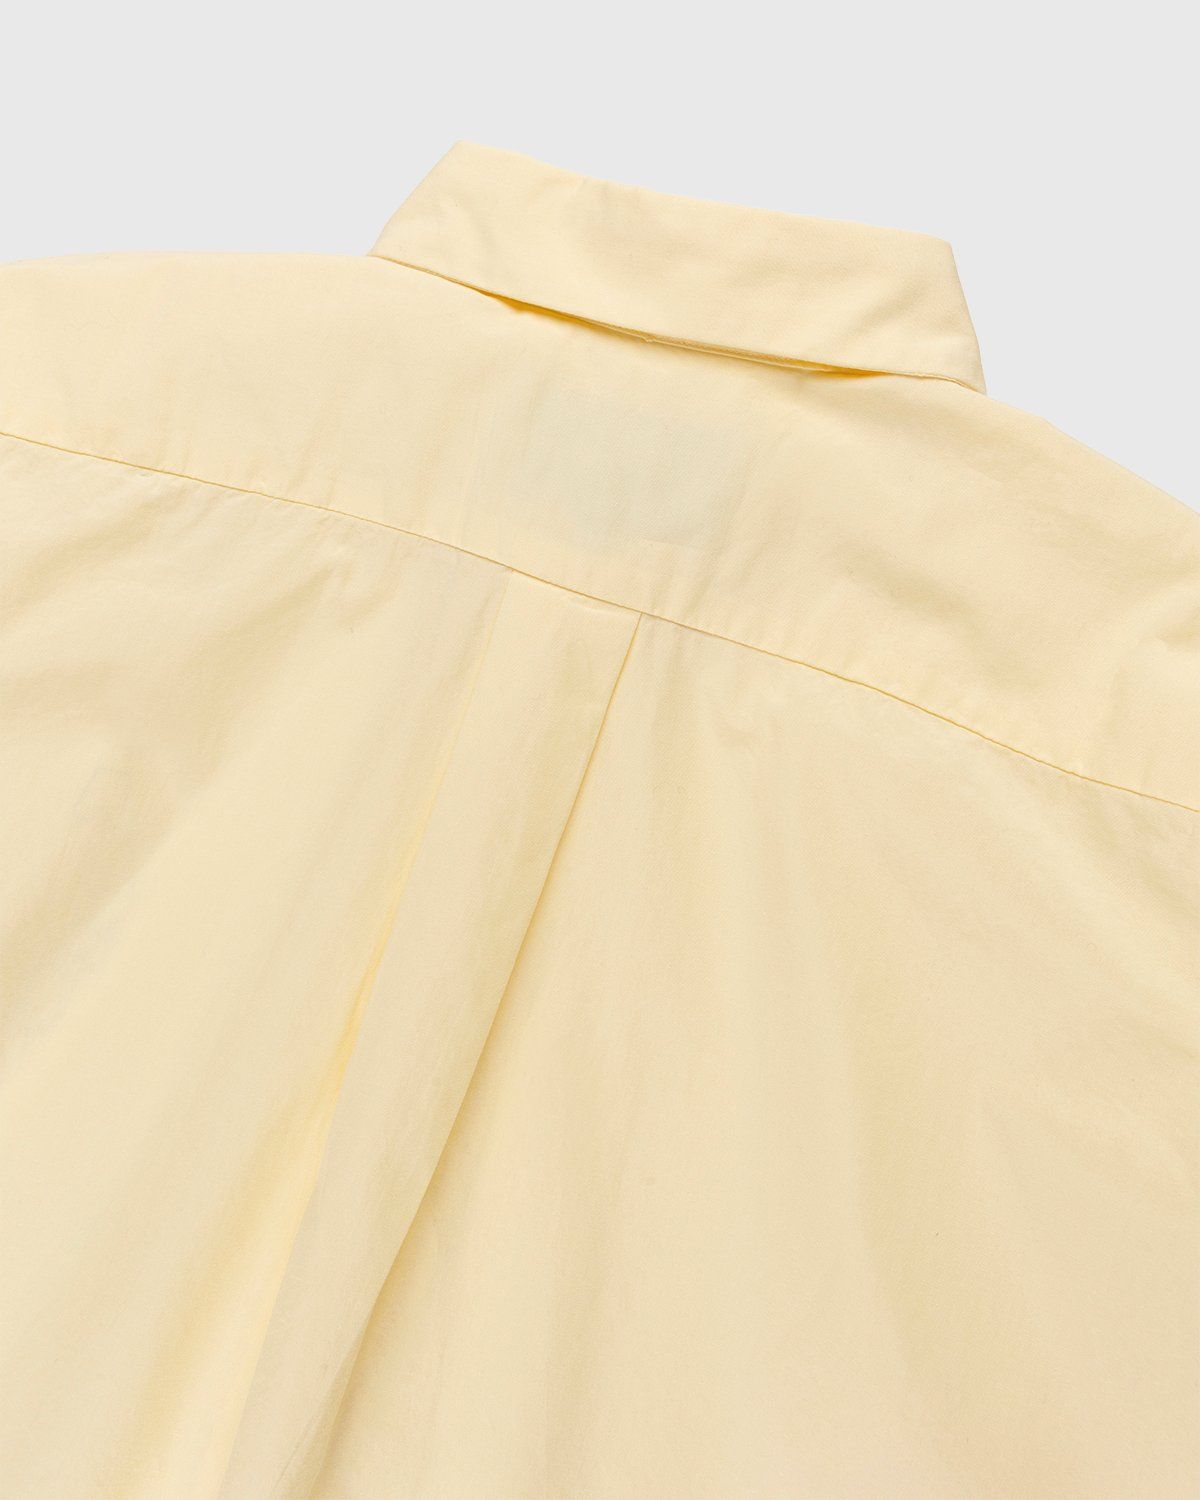 Carne Bollente – Dancing Keen Shirt Butter Yellow - Shirts - Beige - Image 4